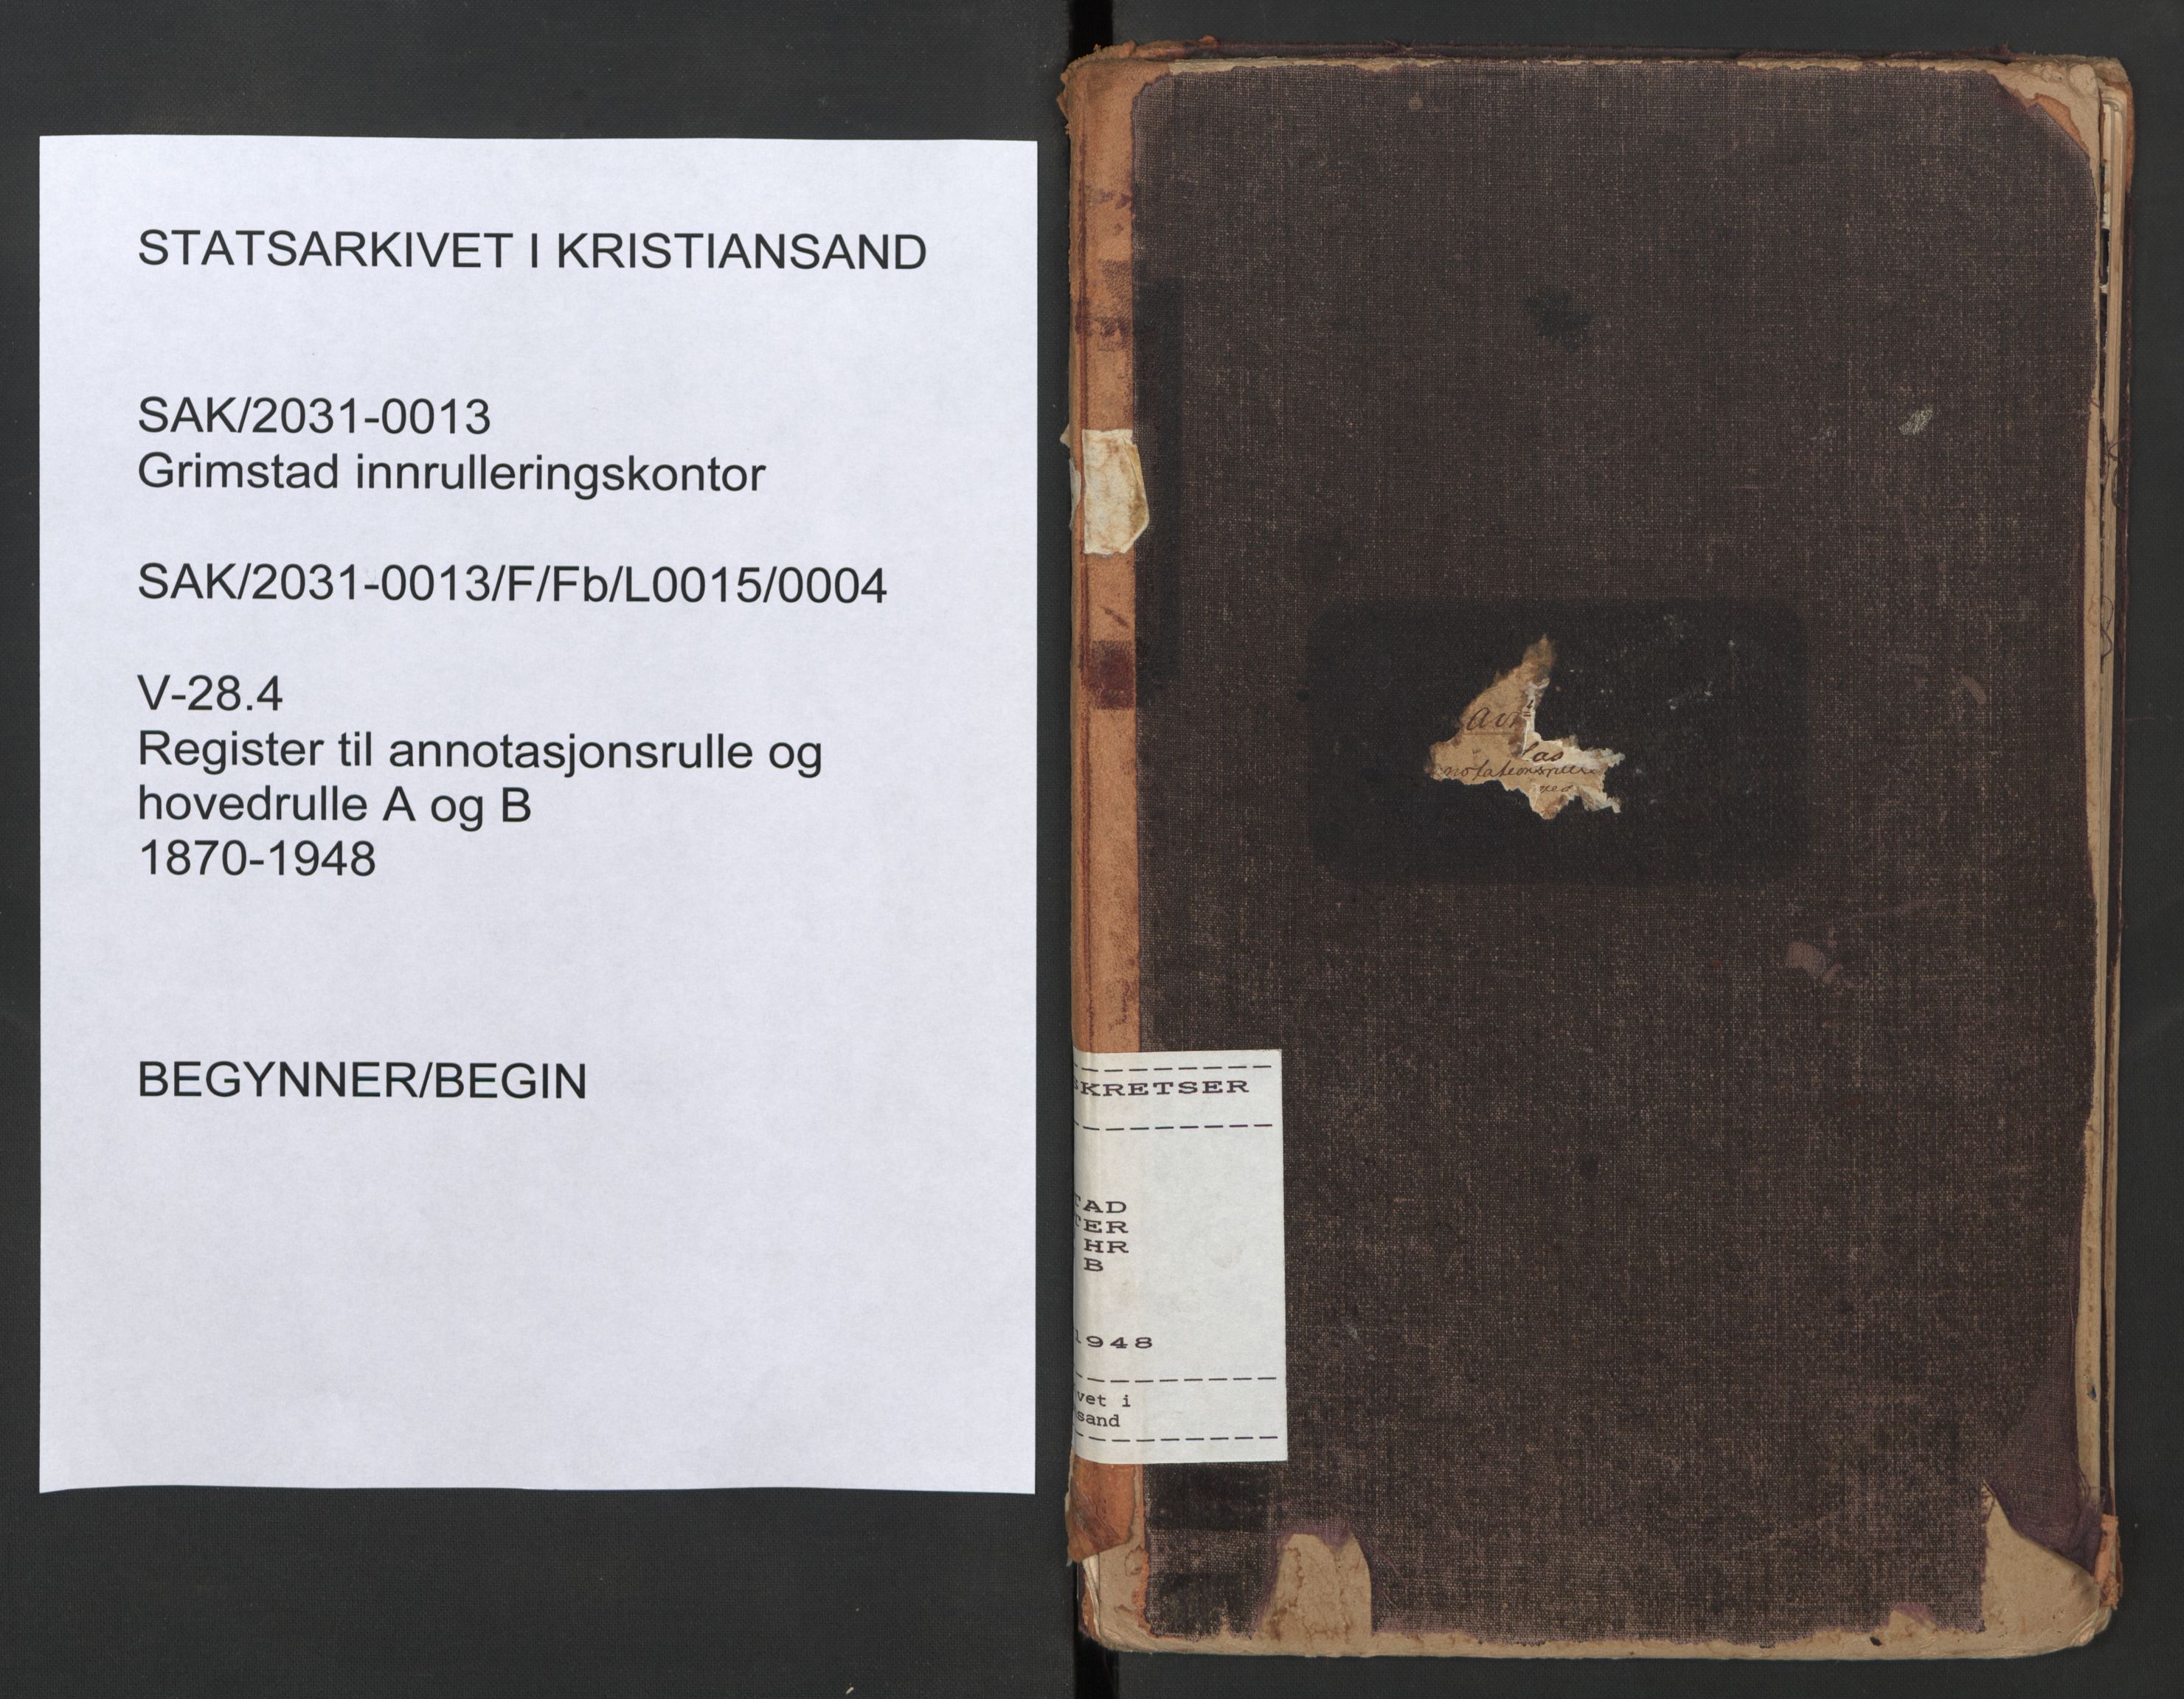 Grimstad mønstringskrets, SAK/2031-0013/F/Fb/L0015/0004: Register til hovedruller og patenter, V-28 / Register til annotasjonsrulle og hovedrulle A og B, 1870-1948, p. 1